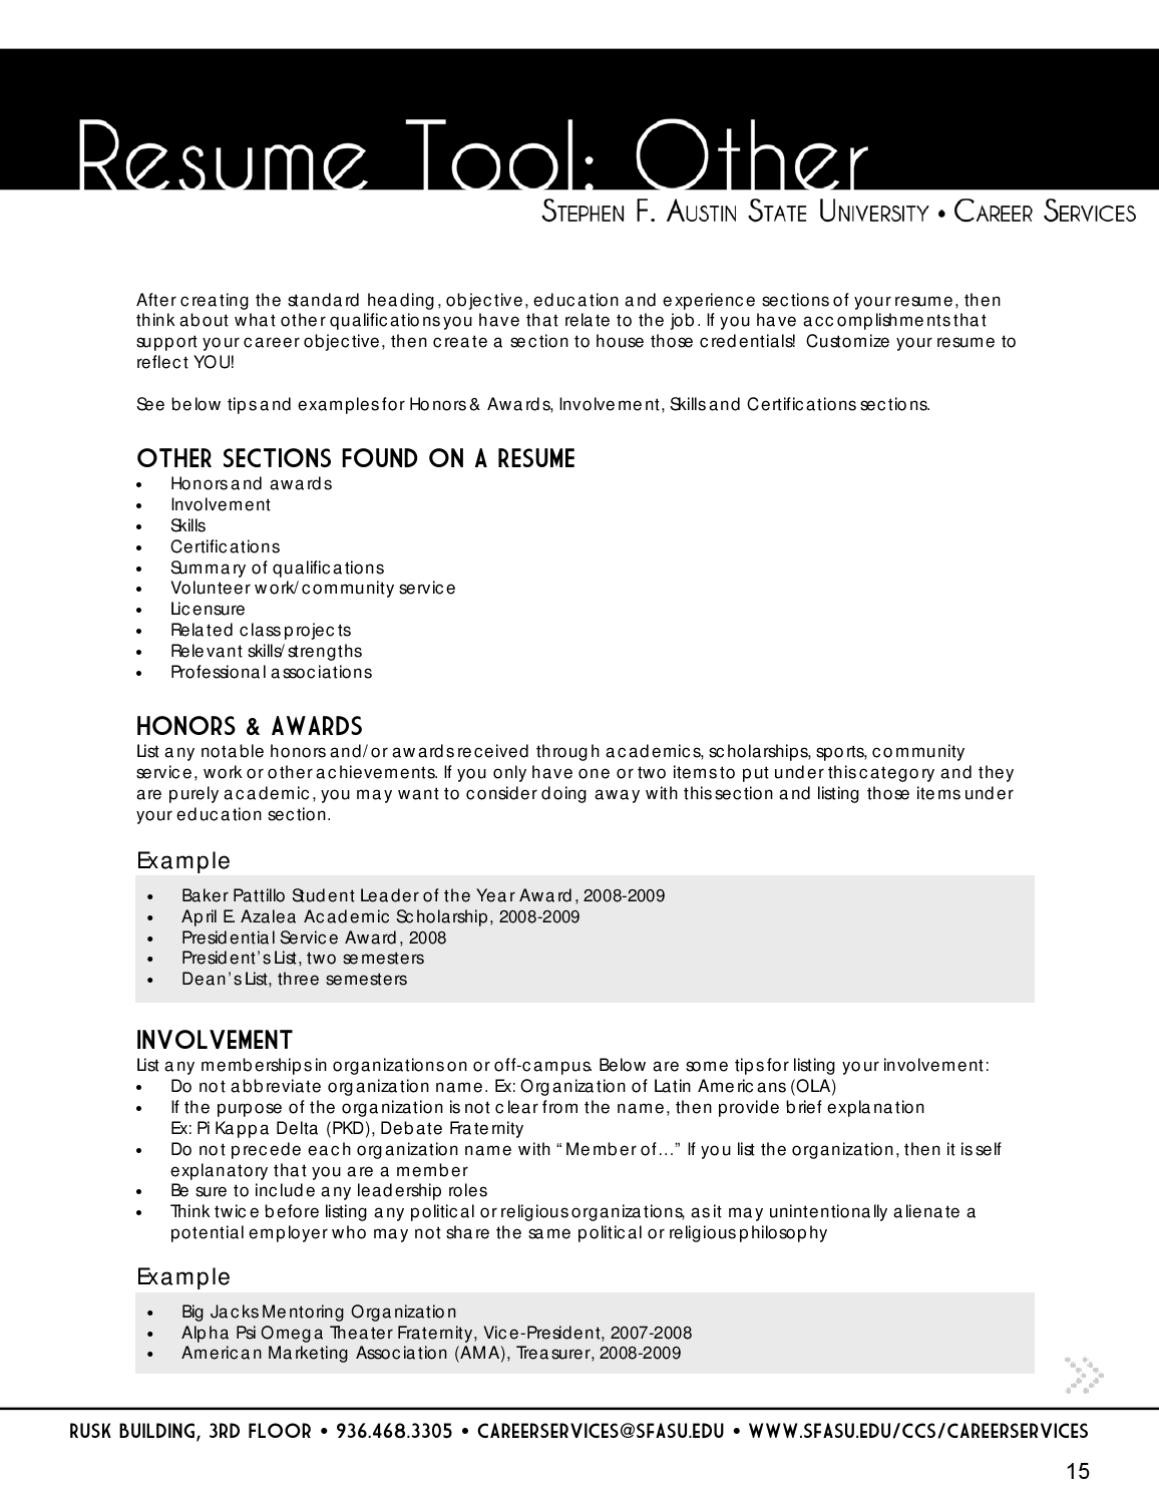 Dean S List On Resume Sample Resume Guide by Sfa Careers – issuu